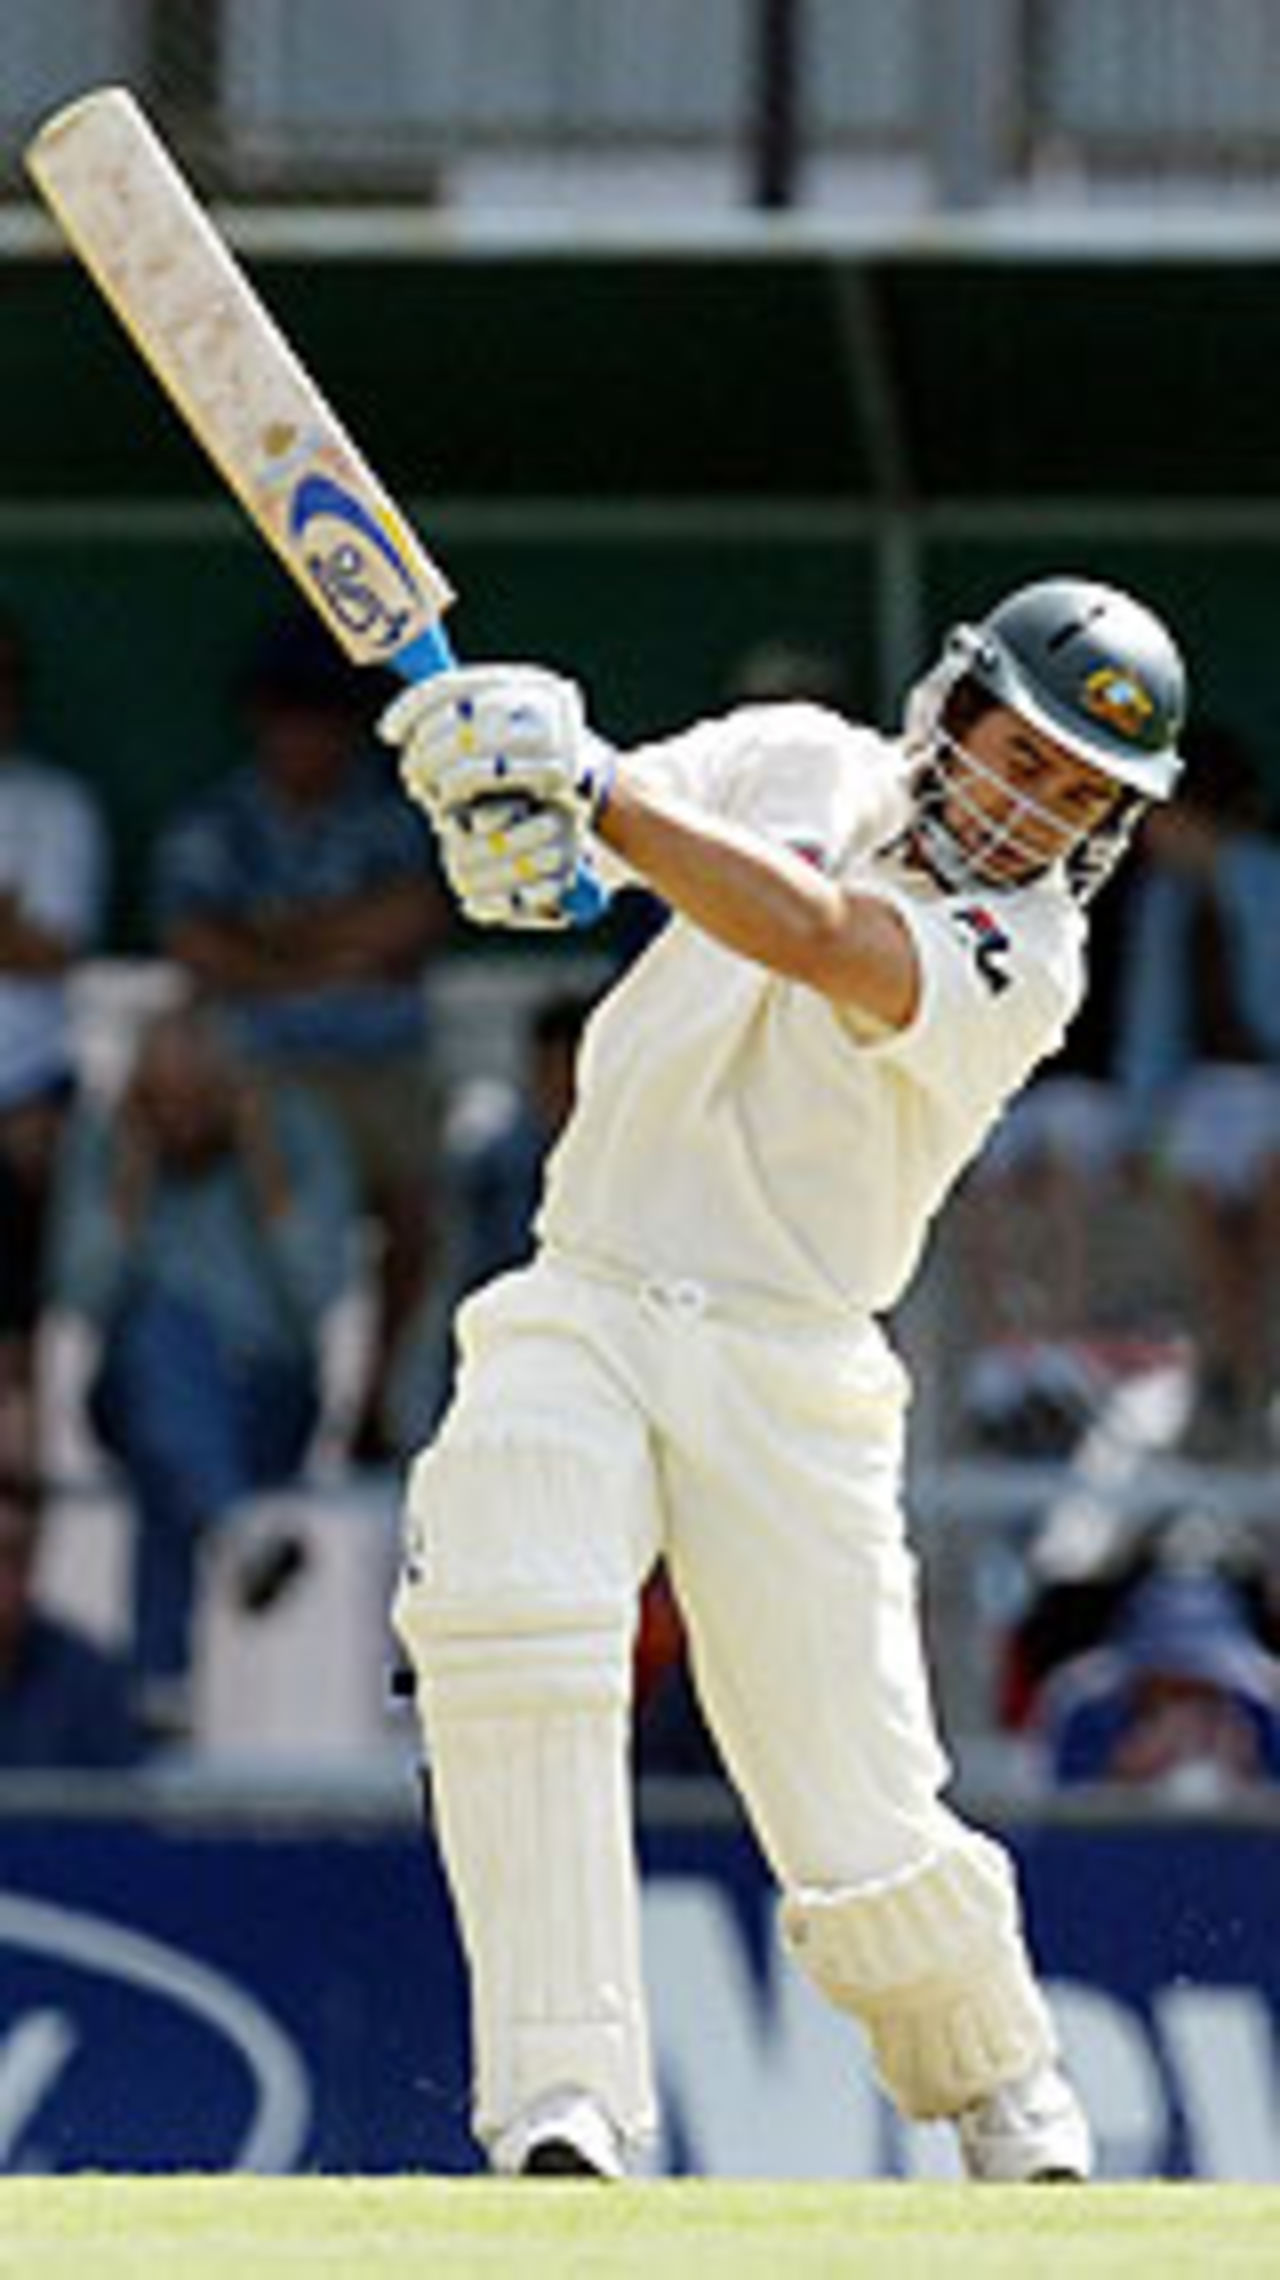 Justin Langer drives to the covers, Australia v Sri Lanka, 2nd Test, Cairns, 1st day, July 9, 2004